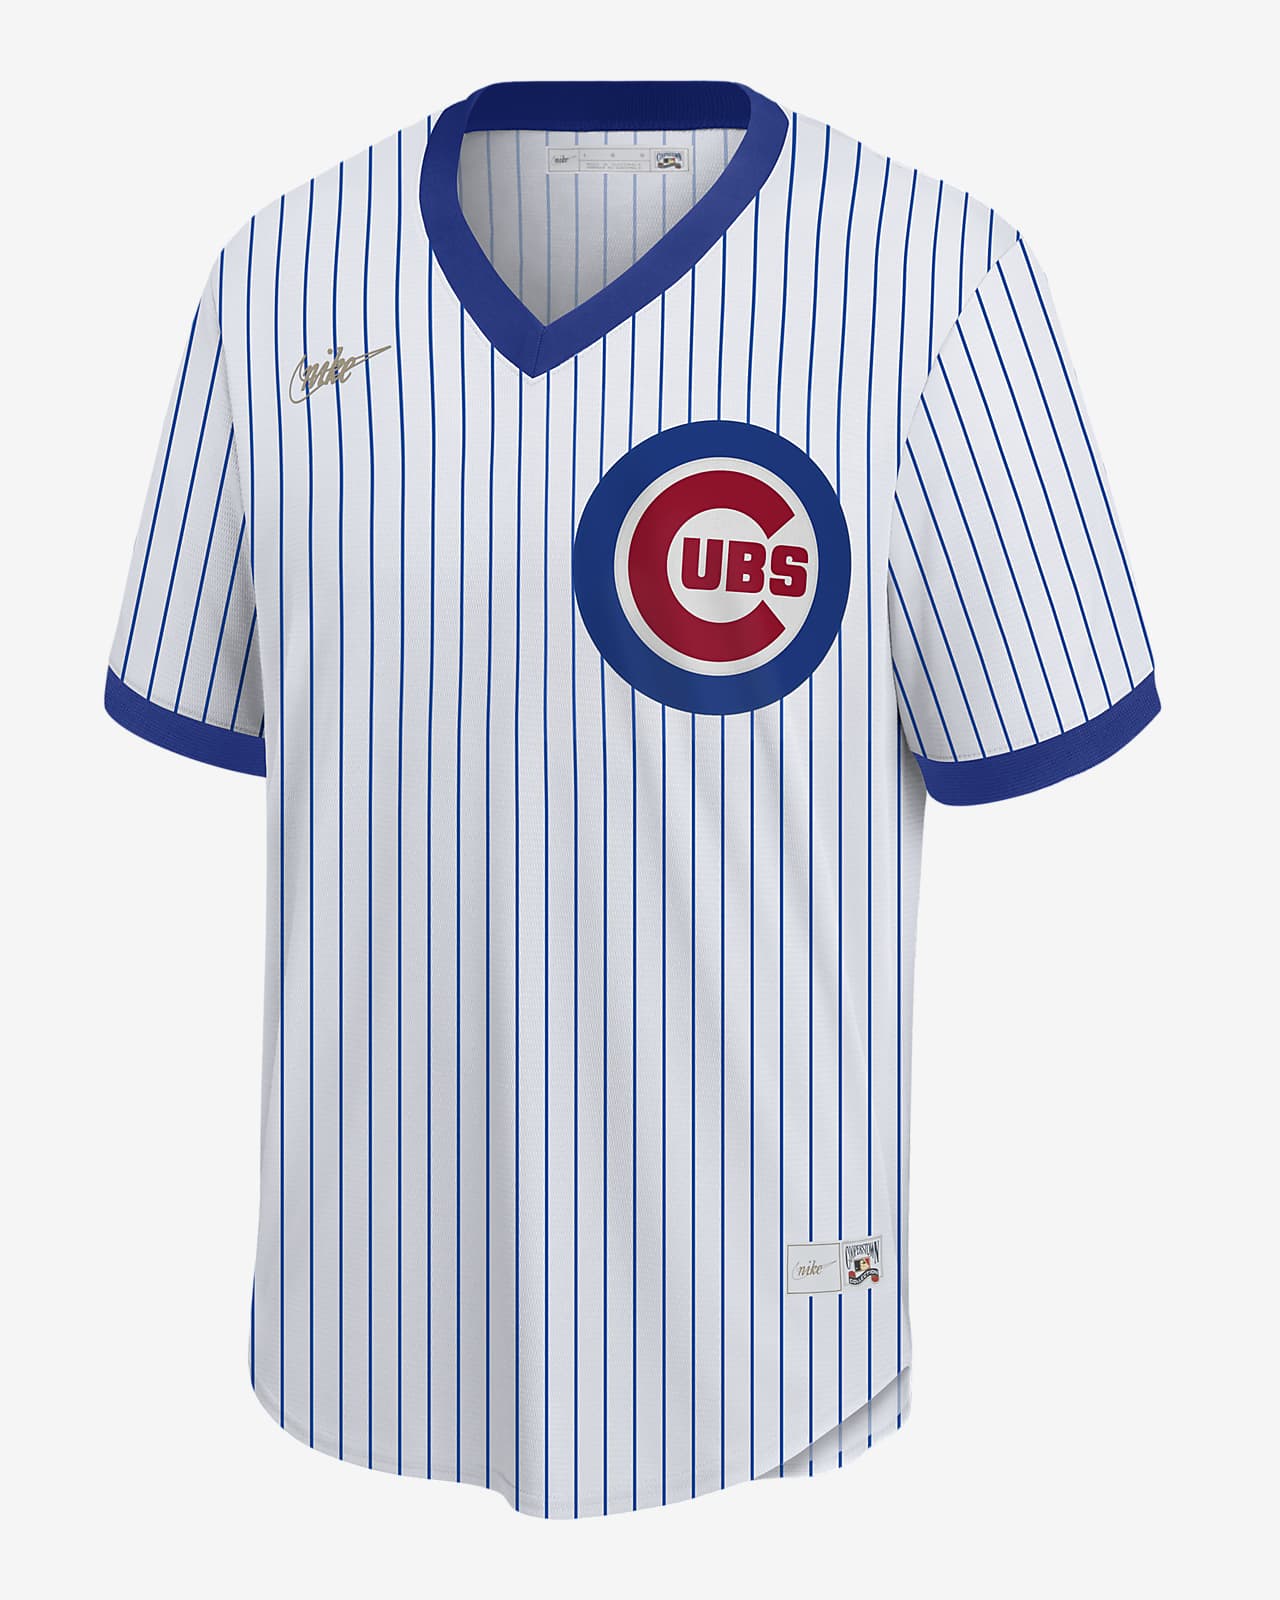 men's chicago cubs jersey